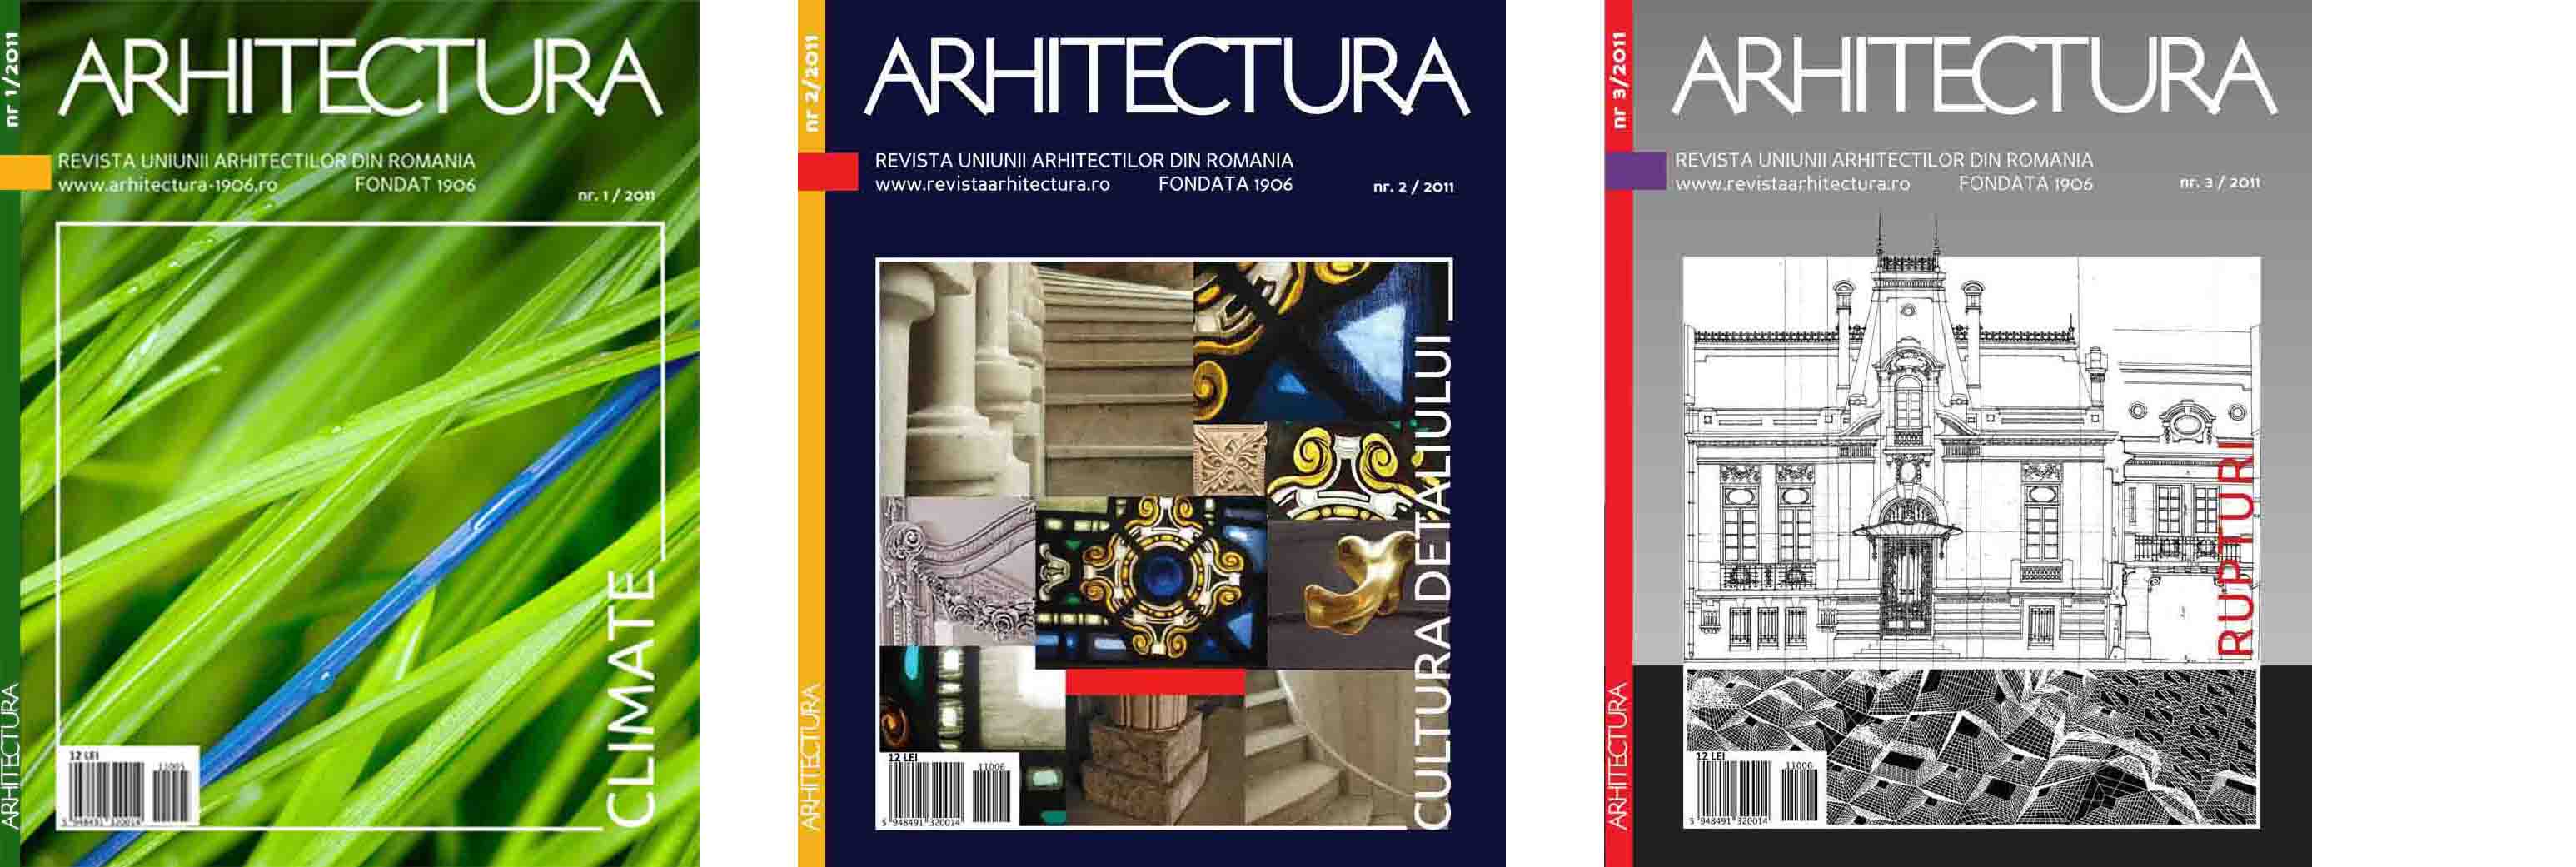 primele trei numere din 2011 ale revistei ARHITECTURA